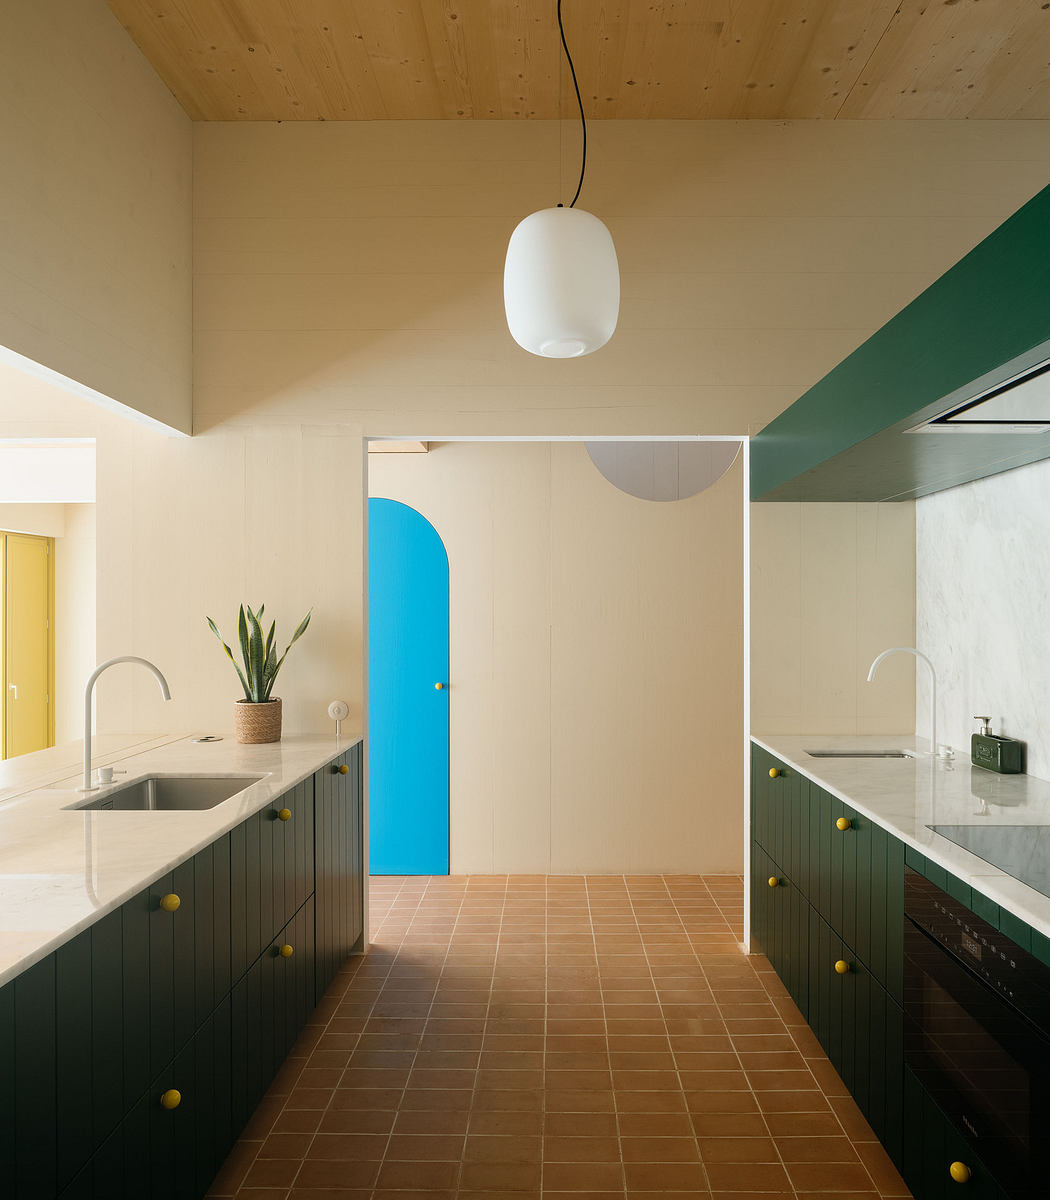 Modern kitchen with wooden ceiling, terracotta floor, and blue door.